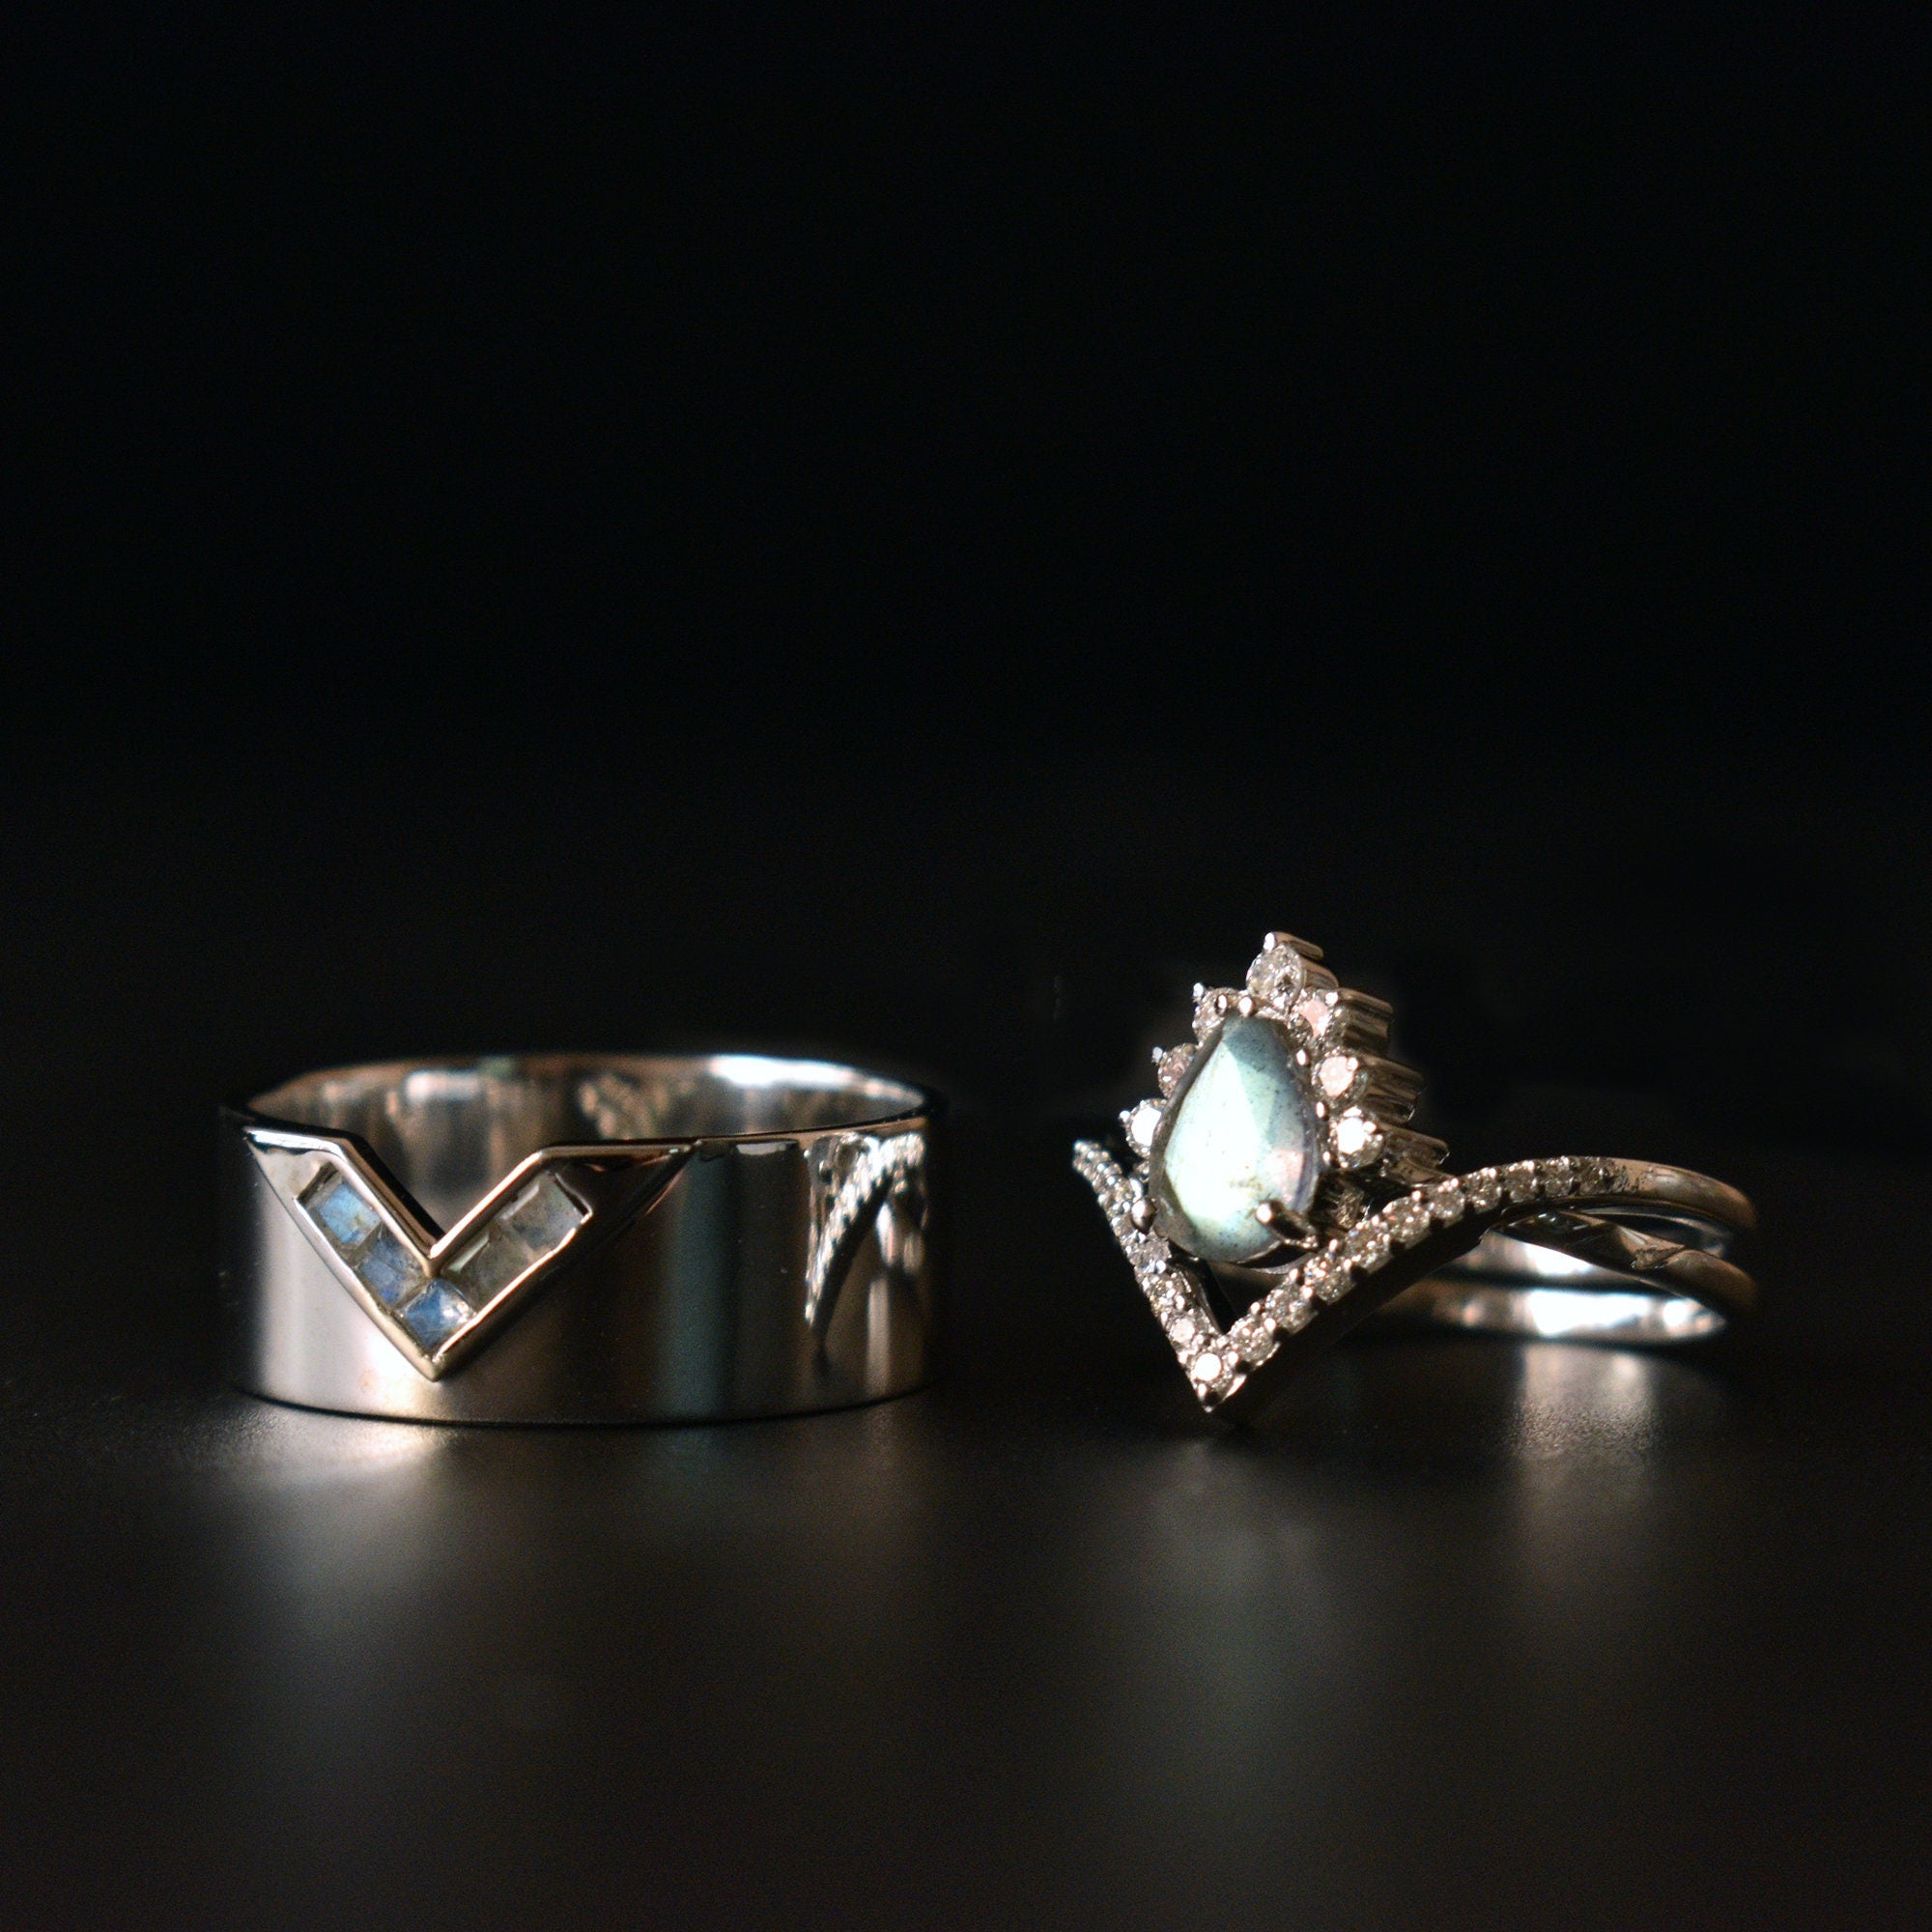 3 Piece Couple Wedding Rings, Silver Wedding Bands, Silver Tungsten Rings,  Silver Tungsten Wedding Bands